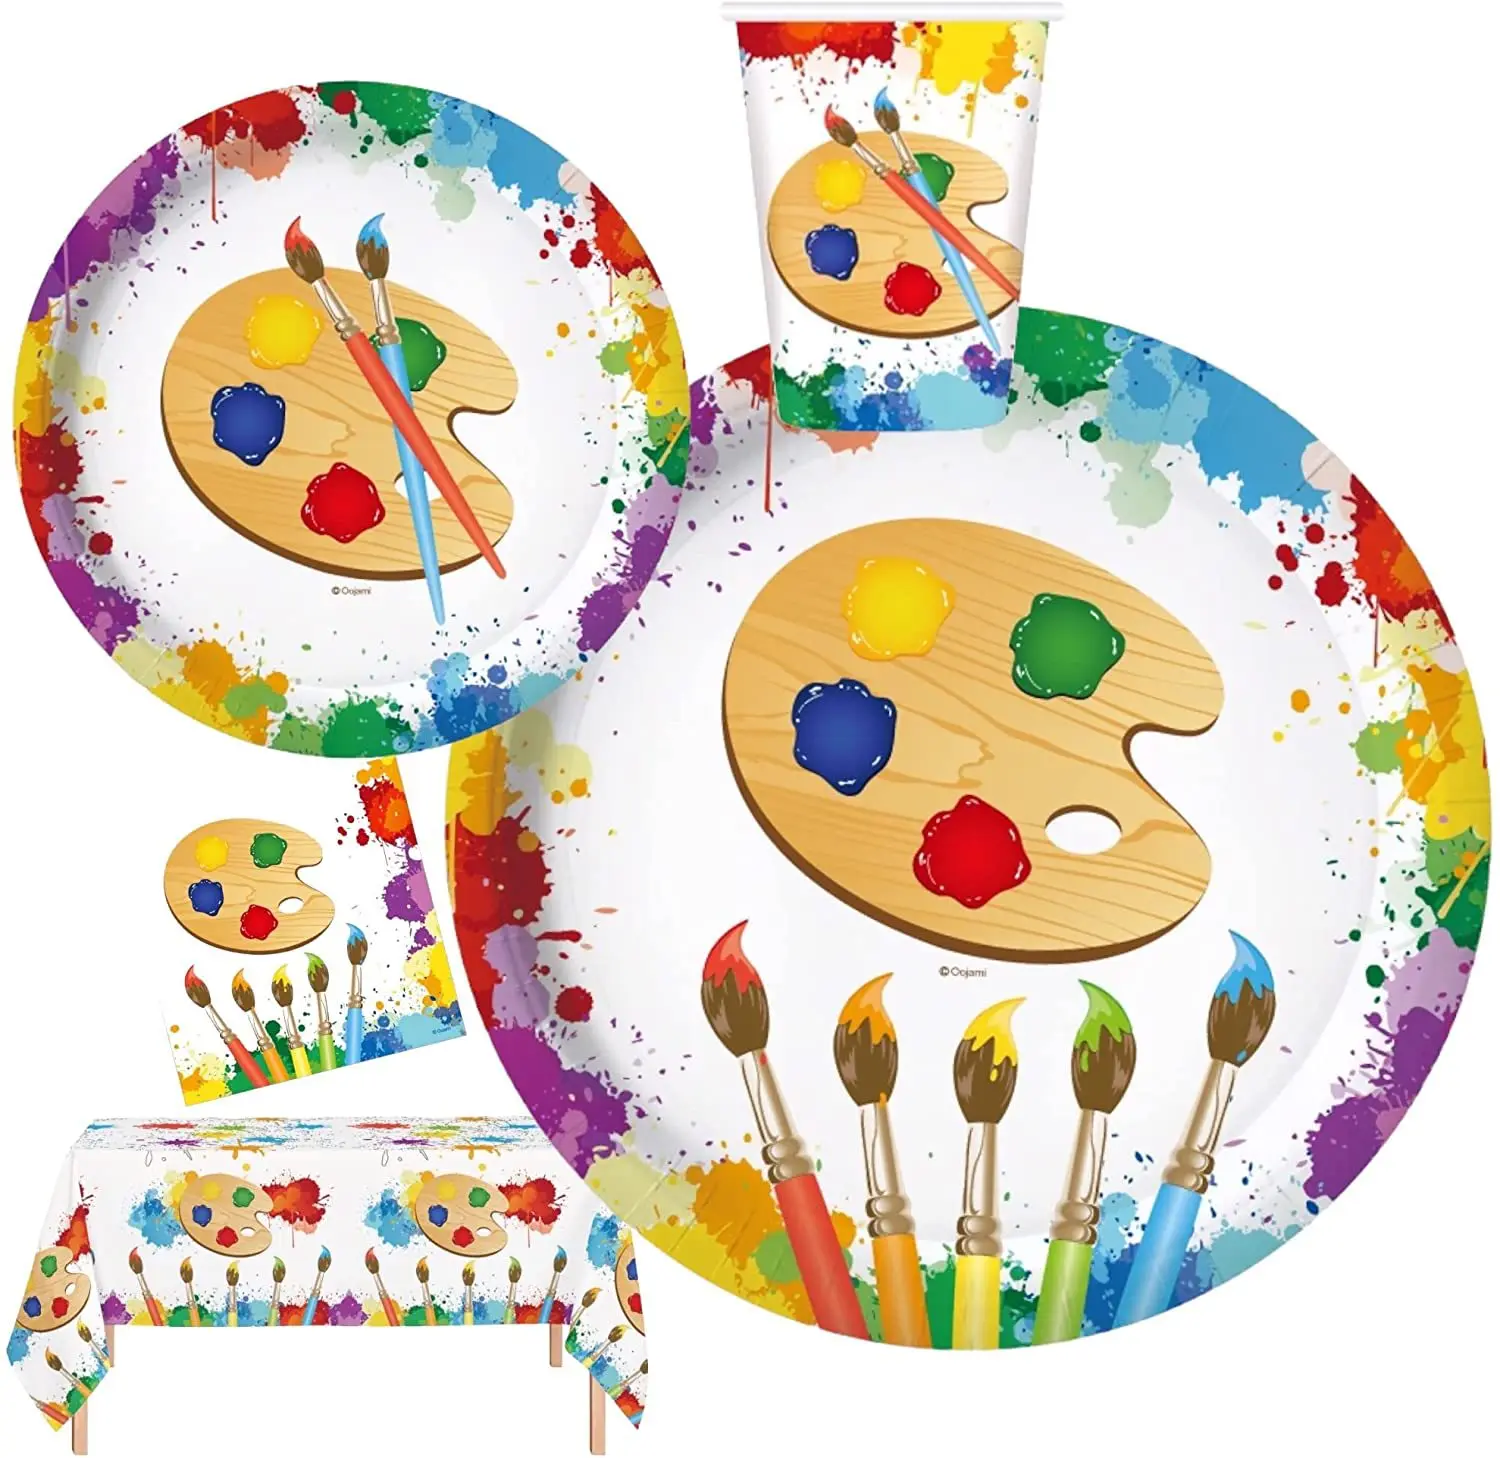  50Pcs Art Paint Party Favors Bags Art Theme Birthday